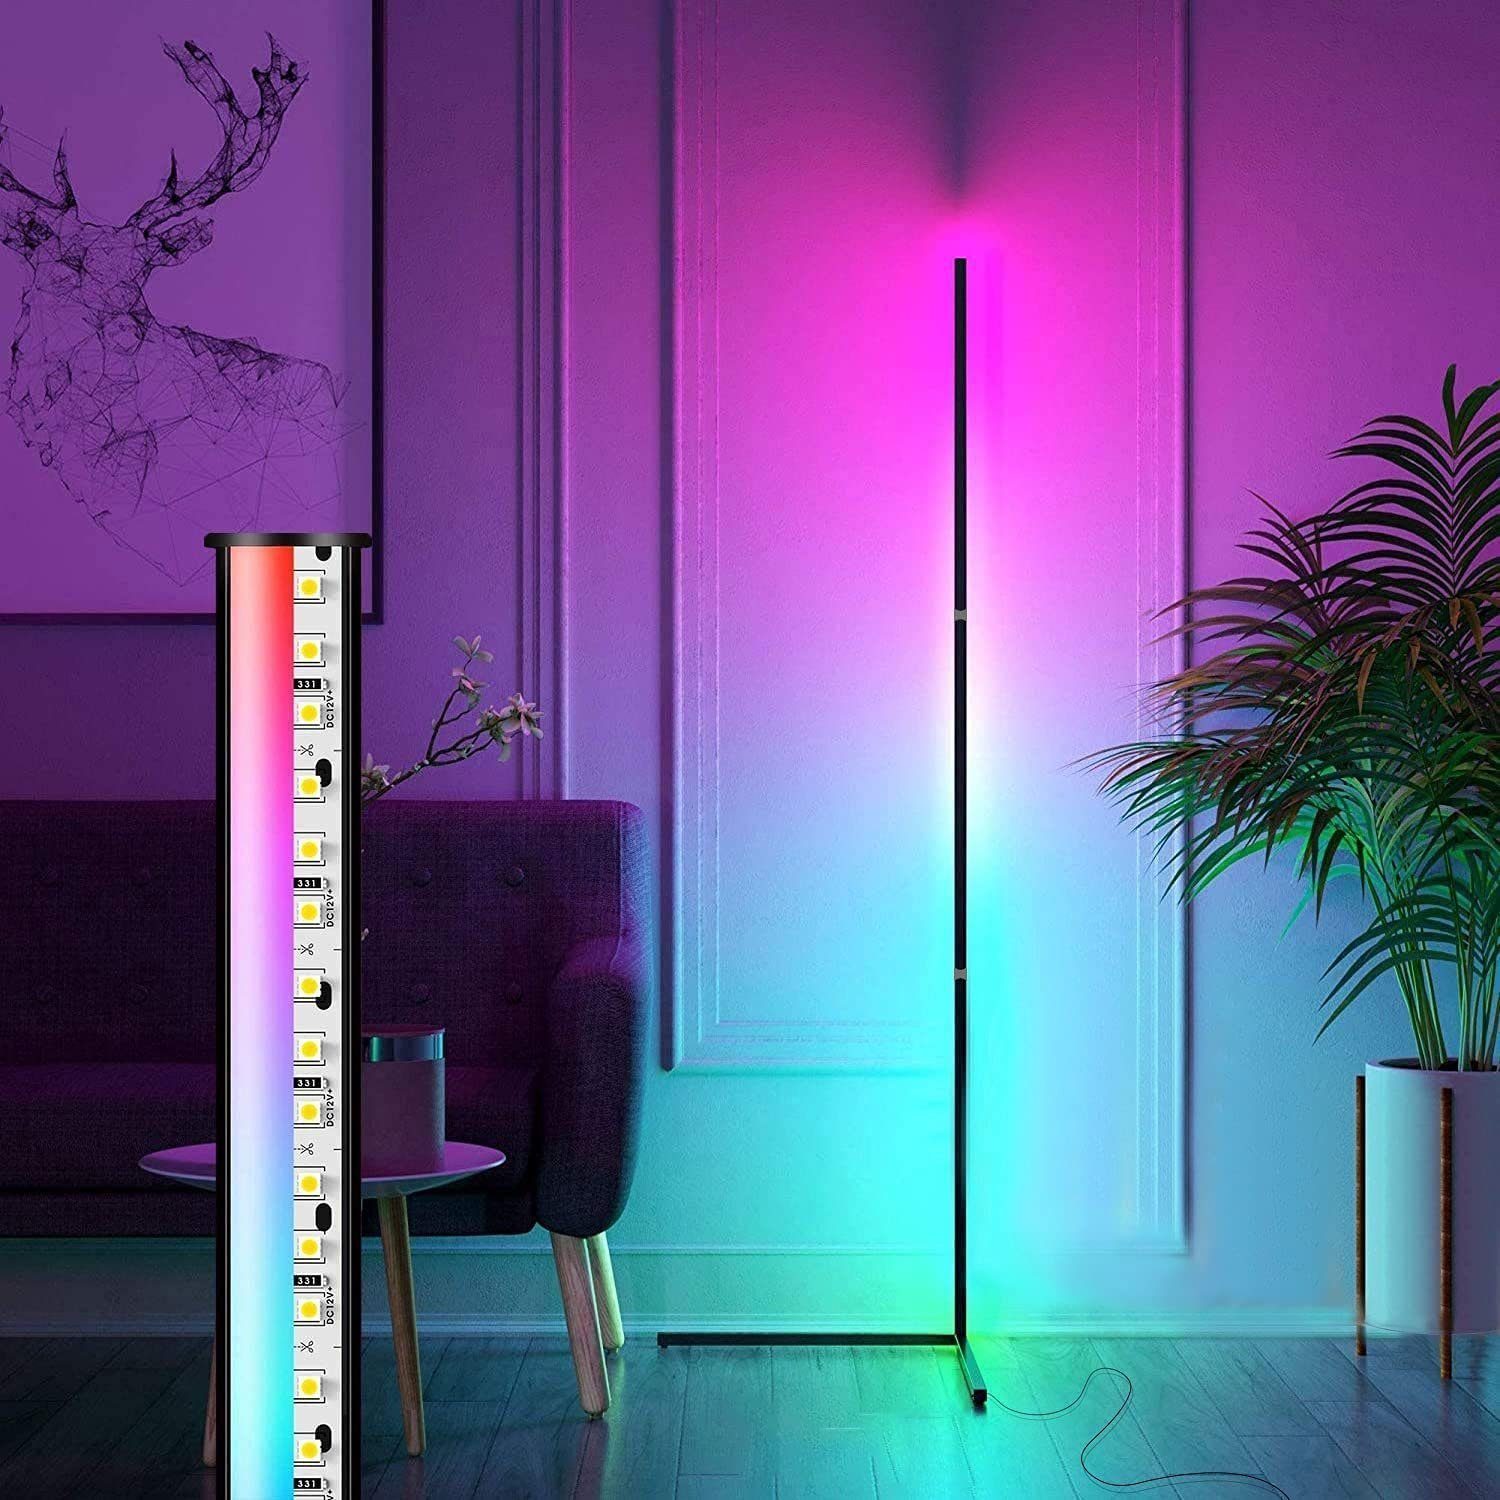 BlingBin LED Stehlampe »LED Stehlampe Stehleuchte Corner Lamp Ecklampe  Dimmbar Musik Snyc 16 Millionen Farben« online kaufen | OTTO